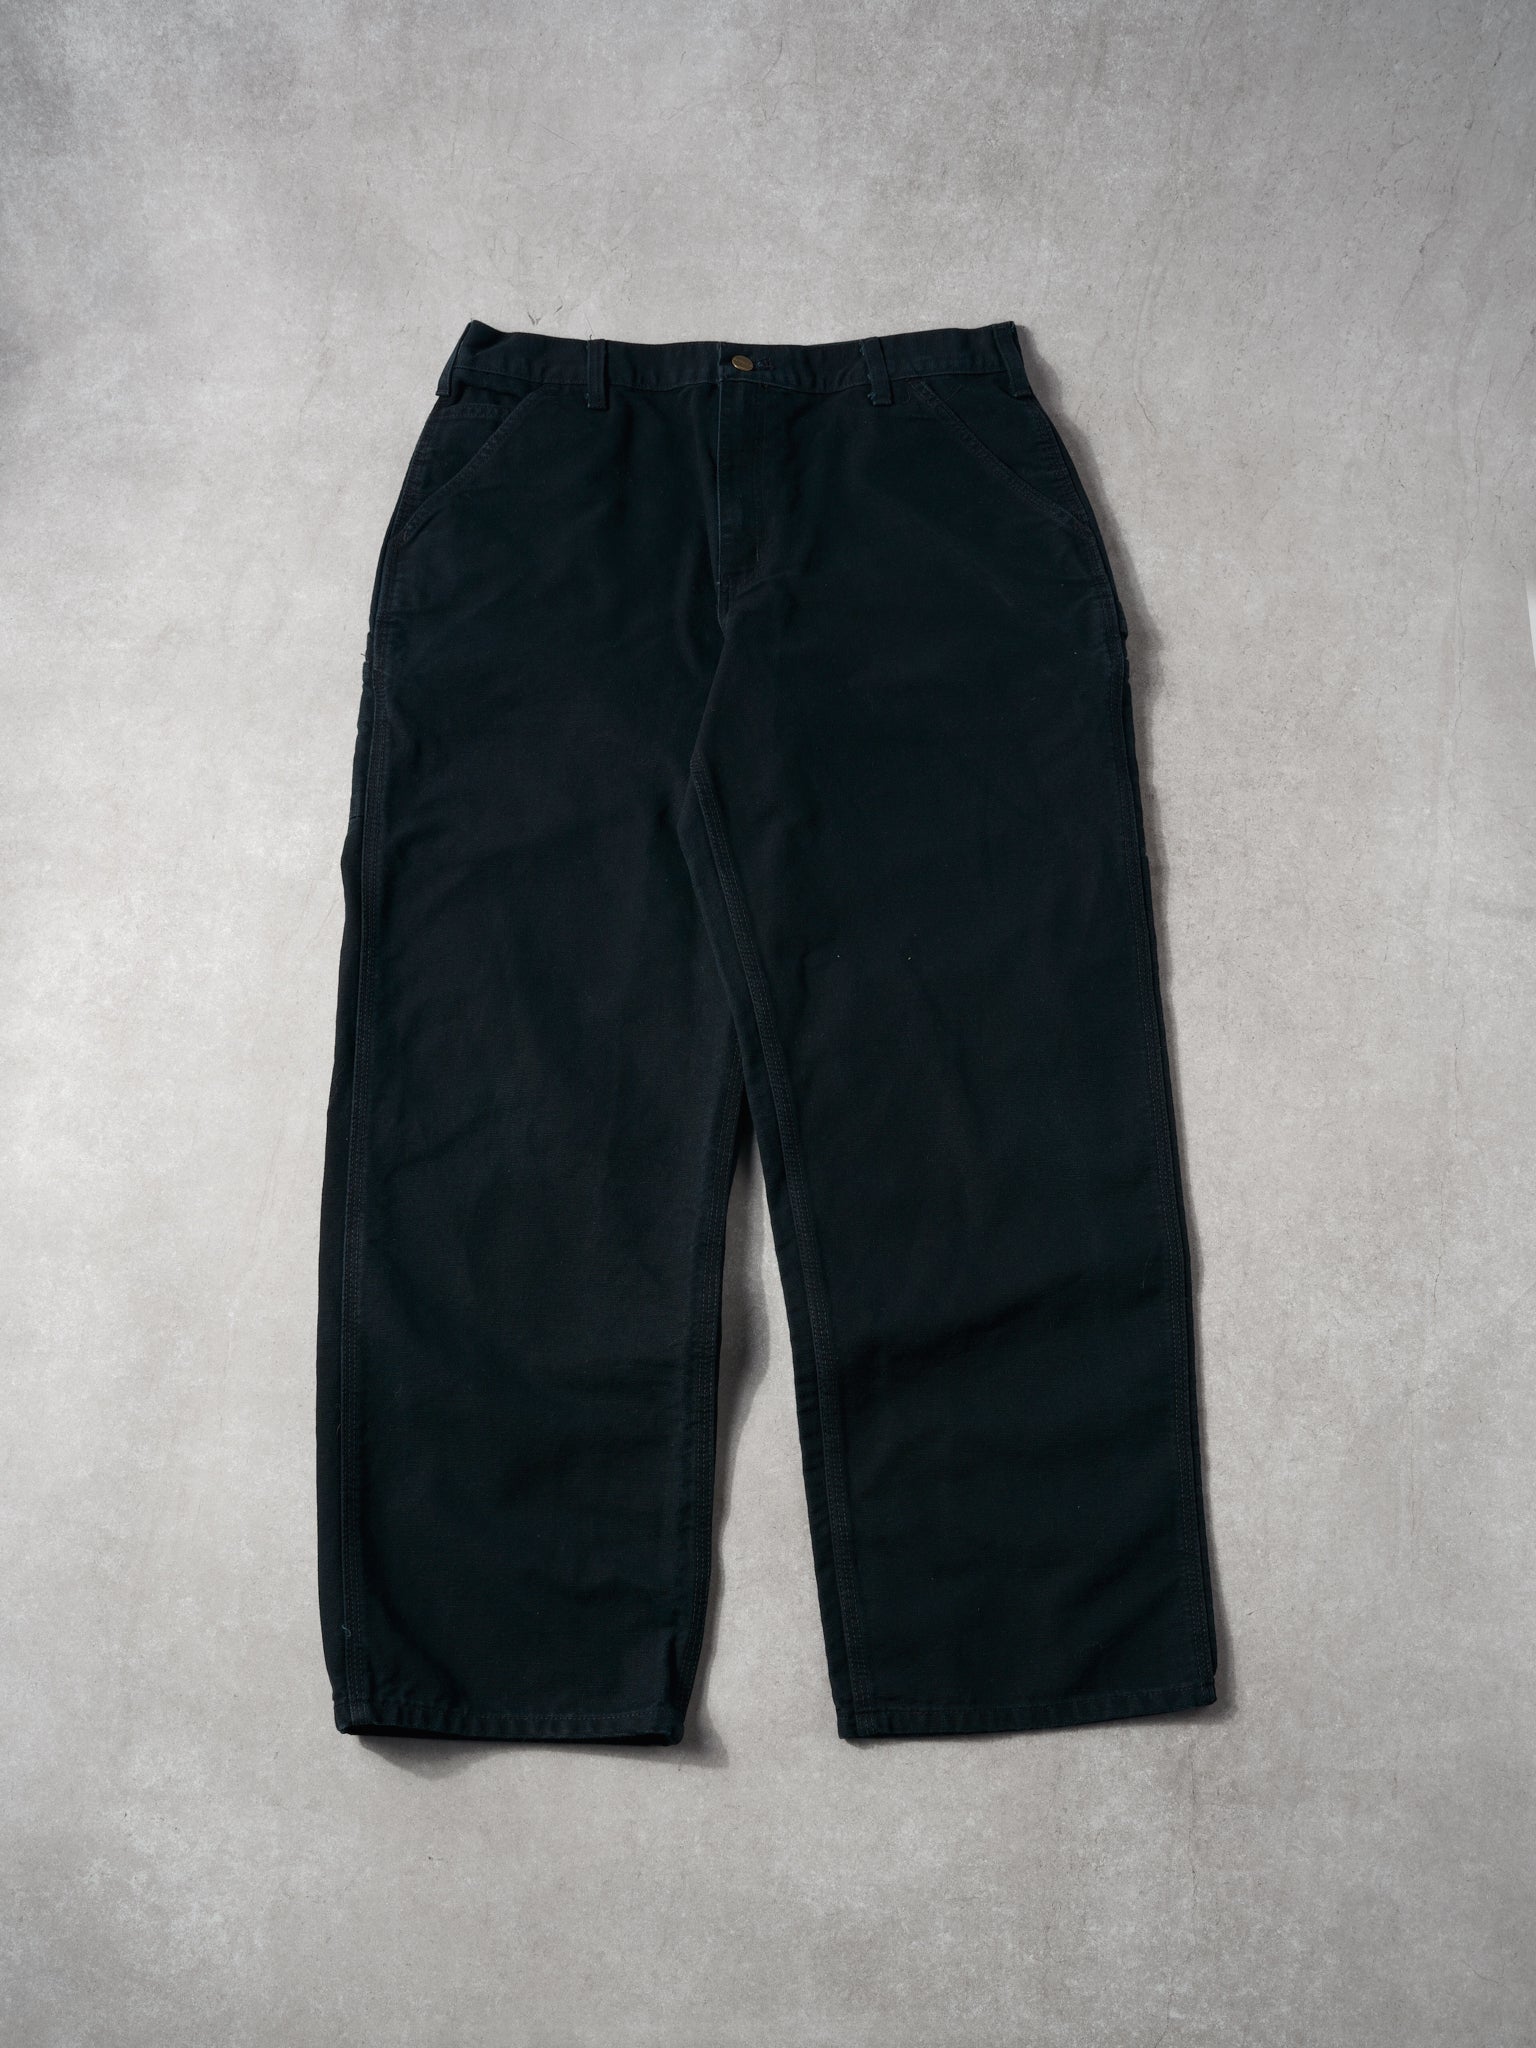 Vintage 90s Black Carhartt Dungeree Fit Carpenter Pants (34x31)